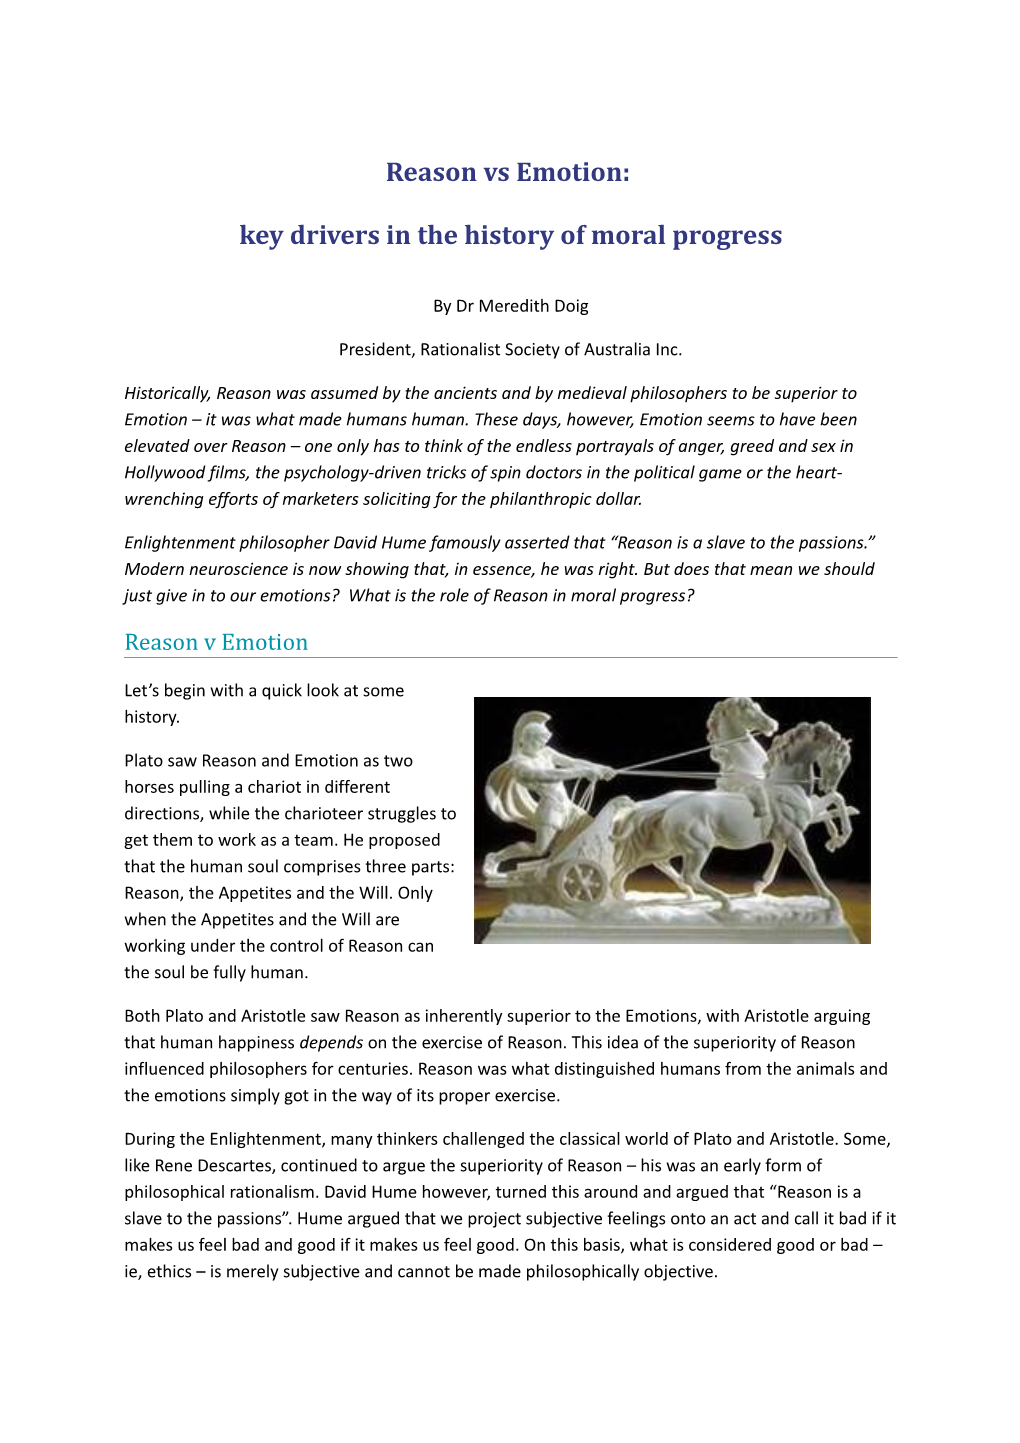 Reason Vs Emotion: Key Drivers in the History of Moral Progress